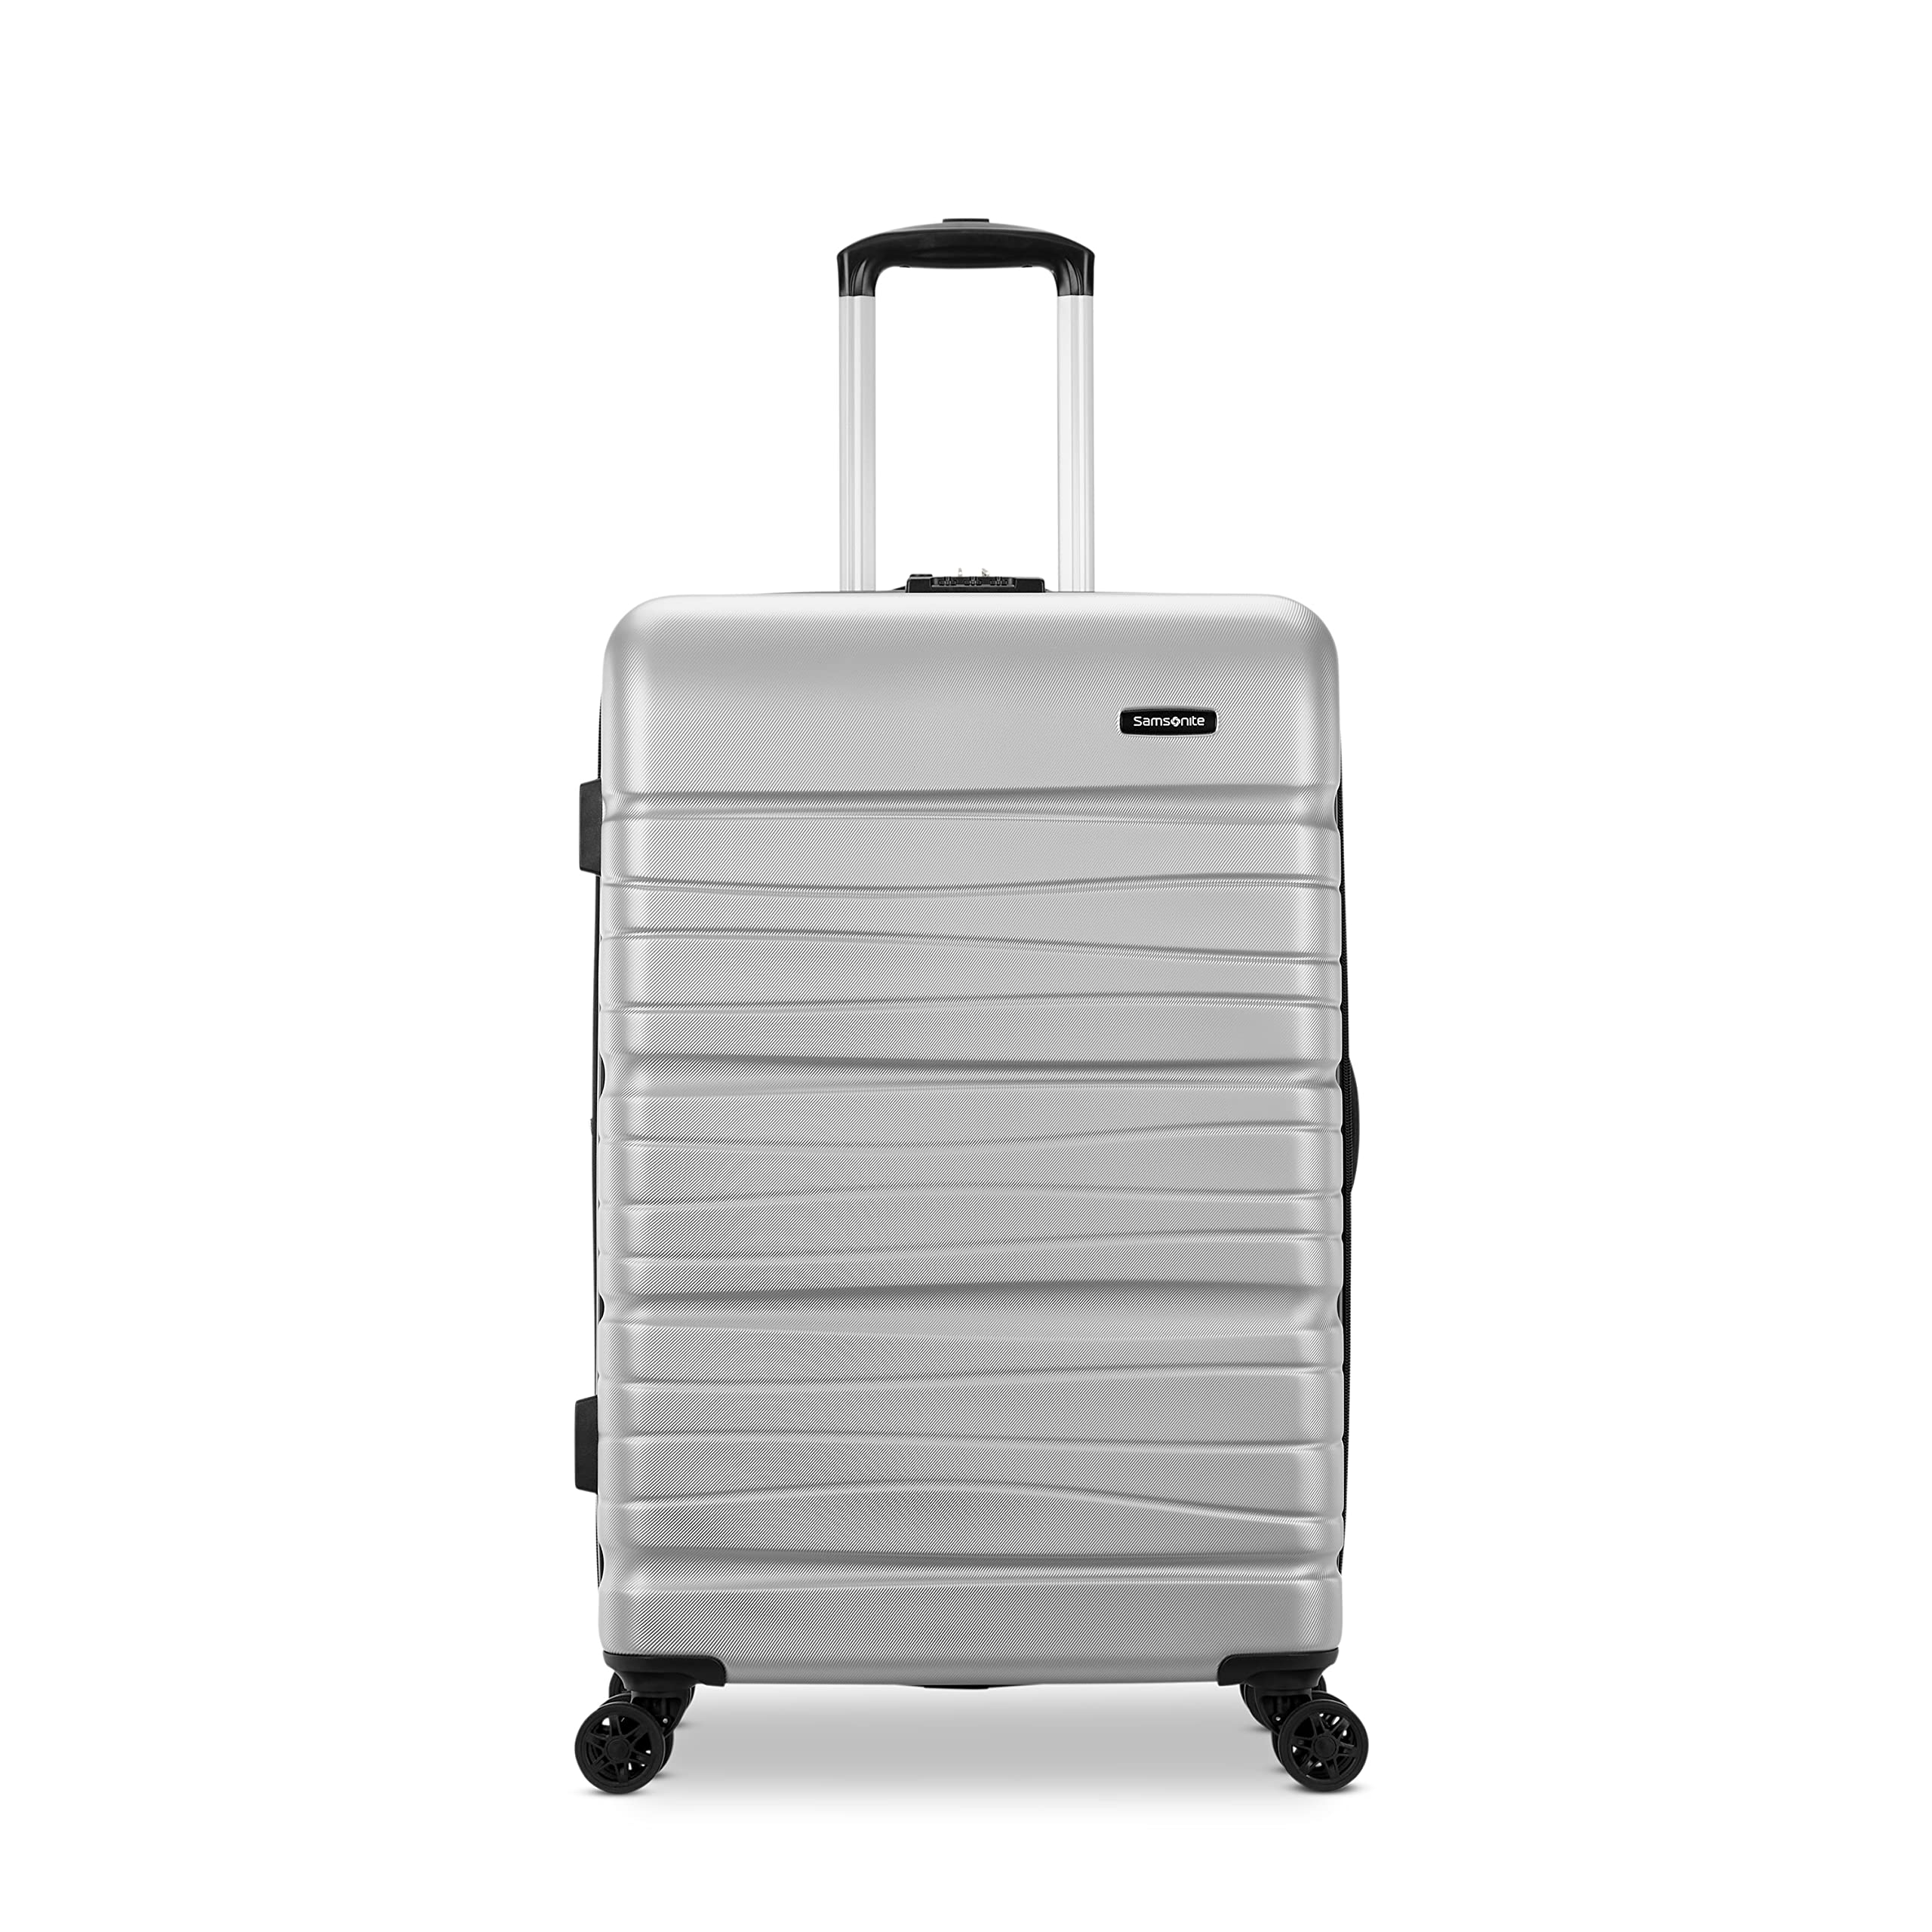 Samsonite Evolve SE Hardside Expandable Luggage with Double Wheels, Arctic Silver, Medium Spinner